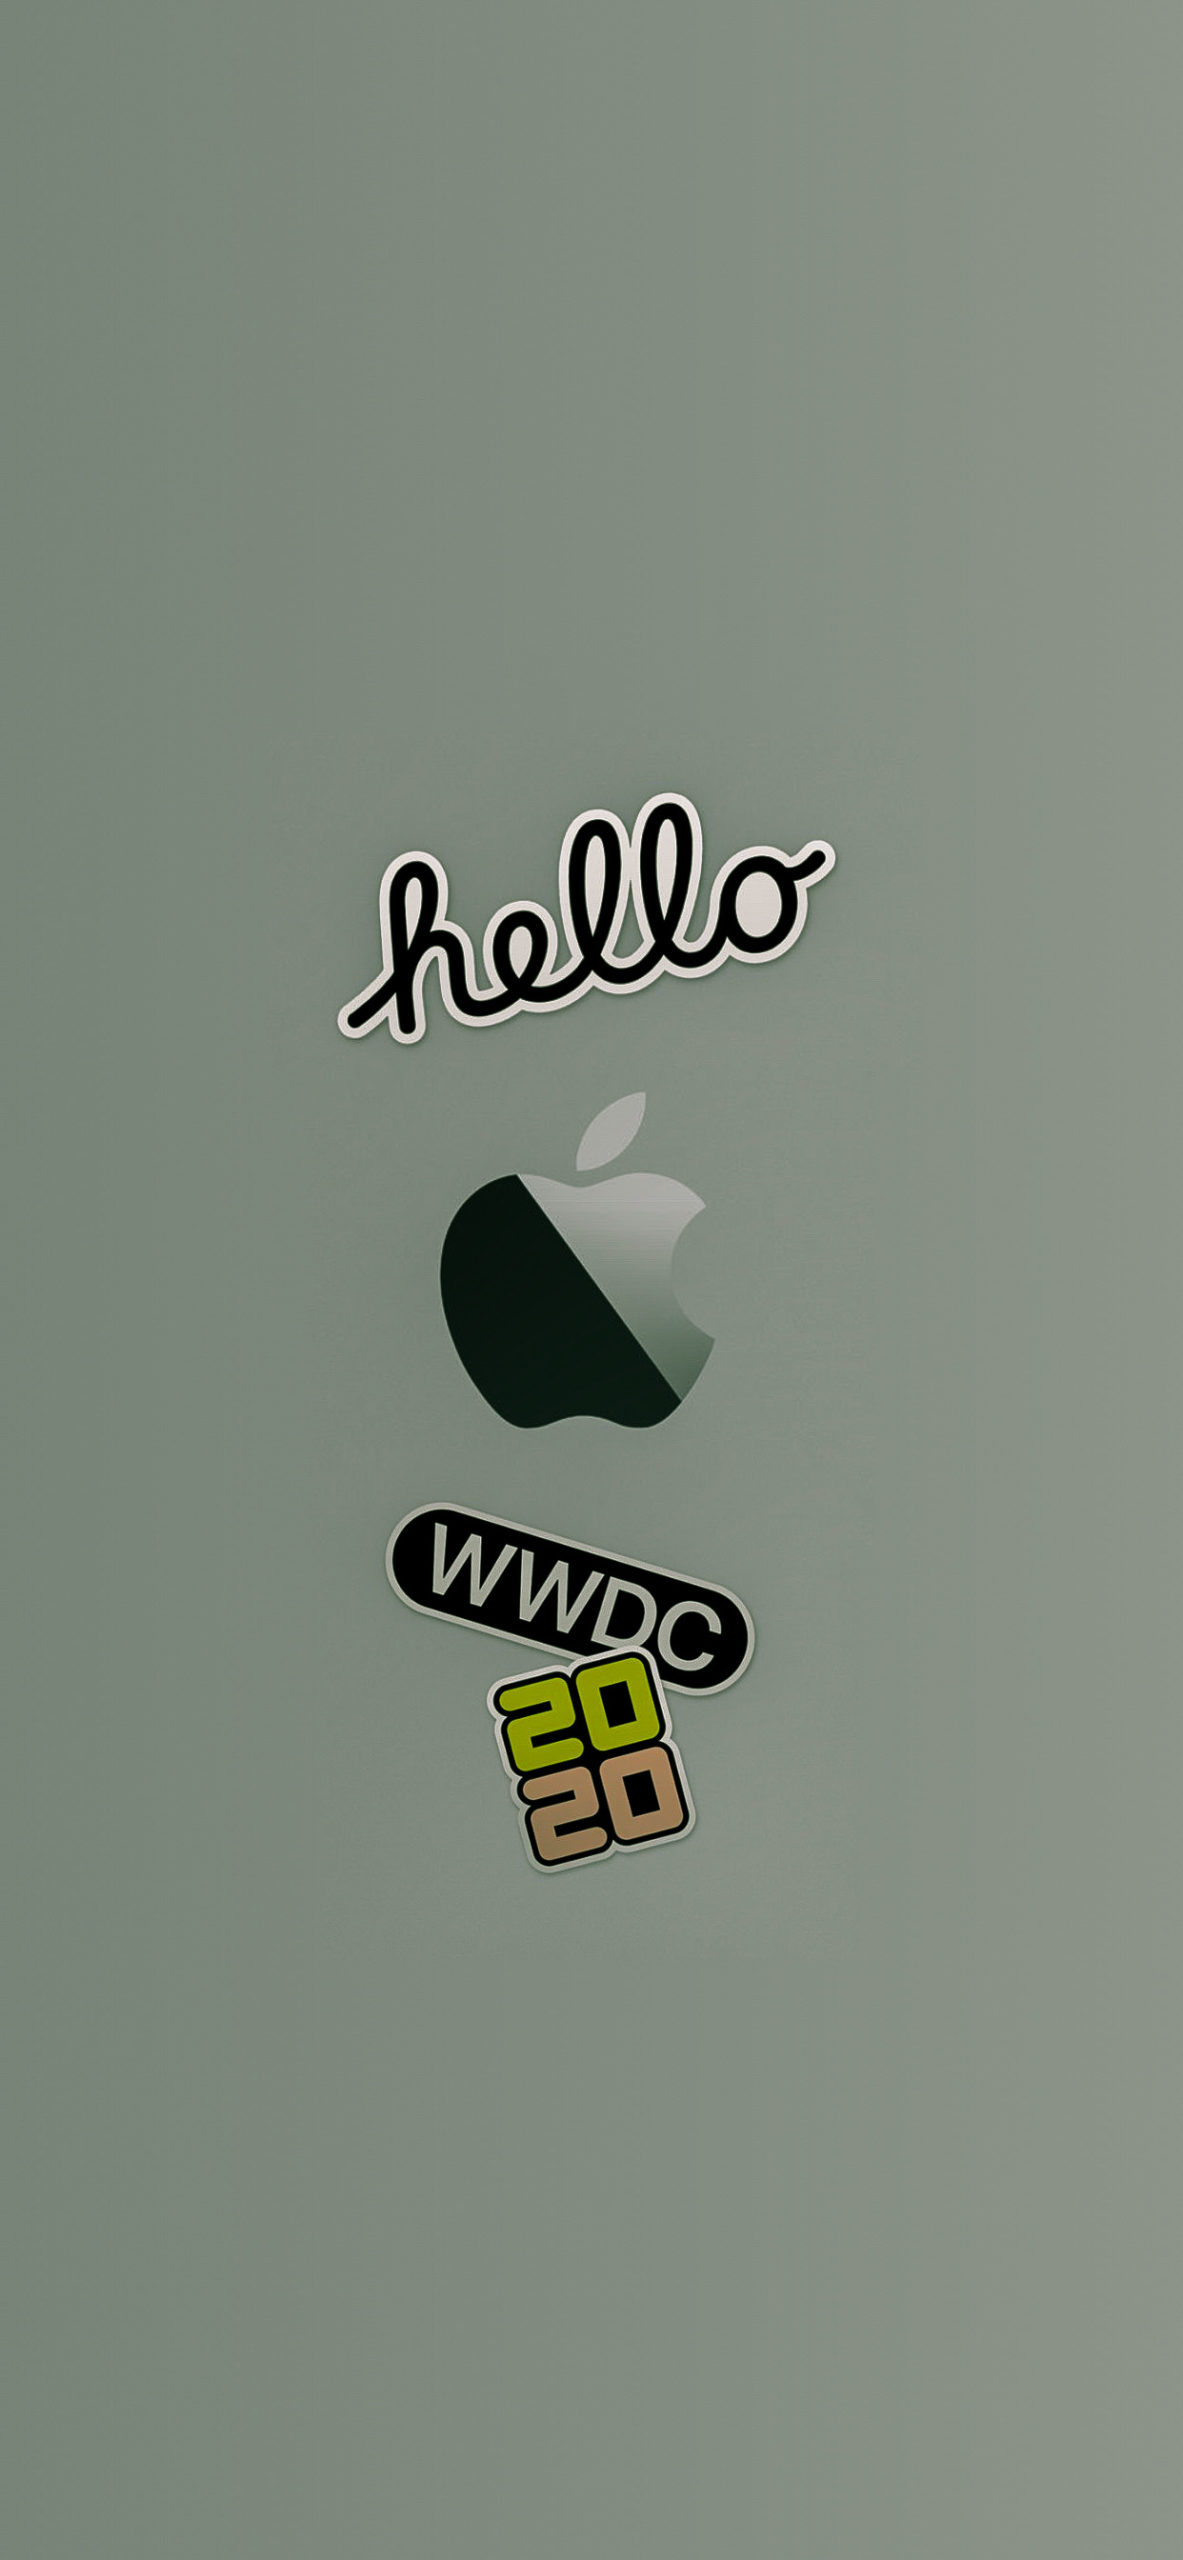 wwdc-2020-wallpaper-iphone-ar72014-idownloadblog-Logos-midnight-green